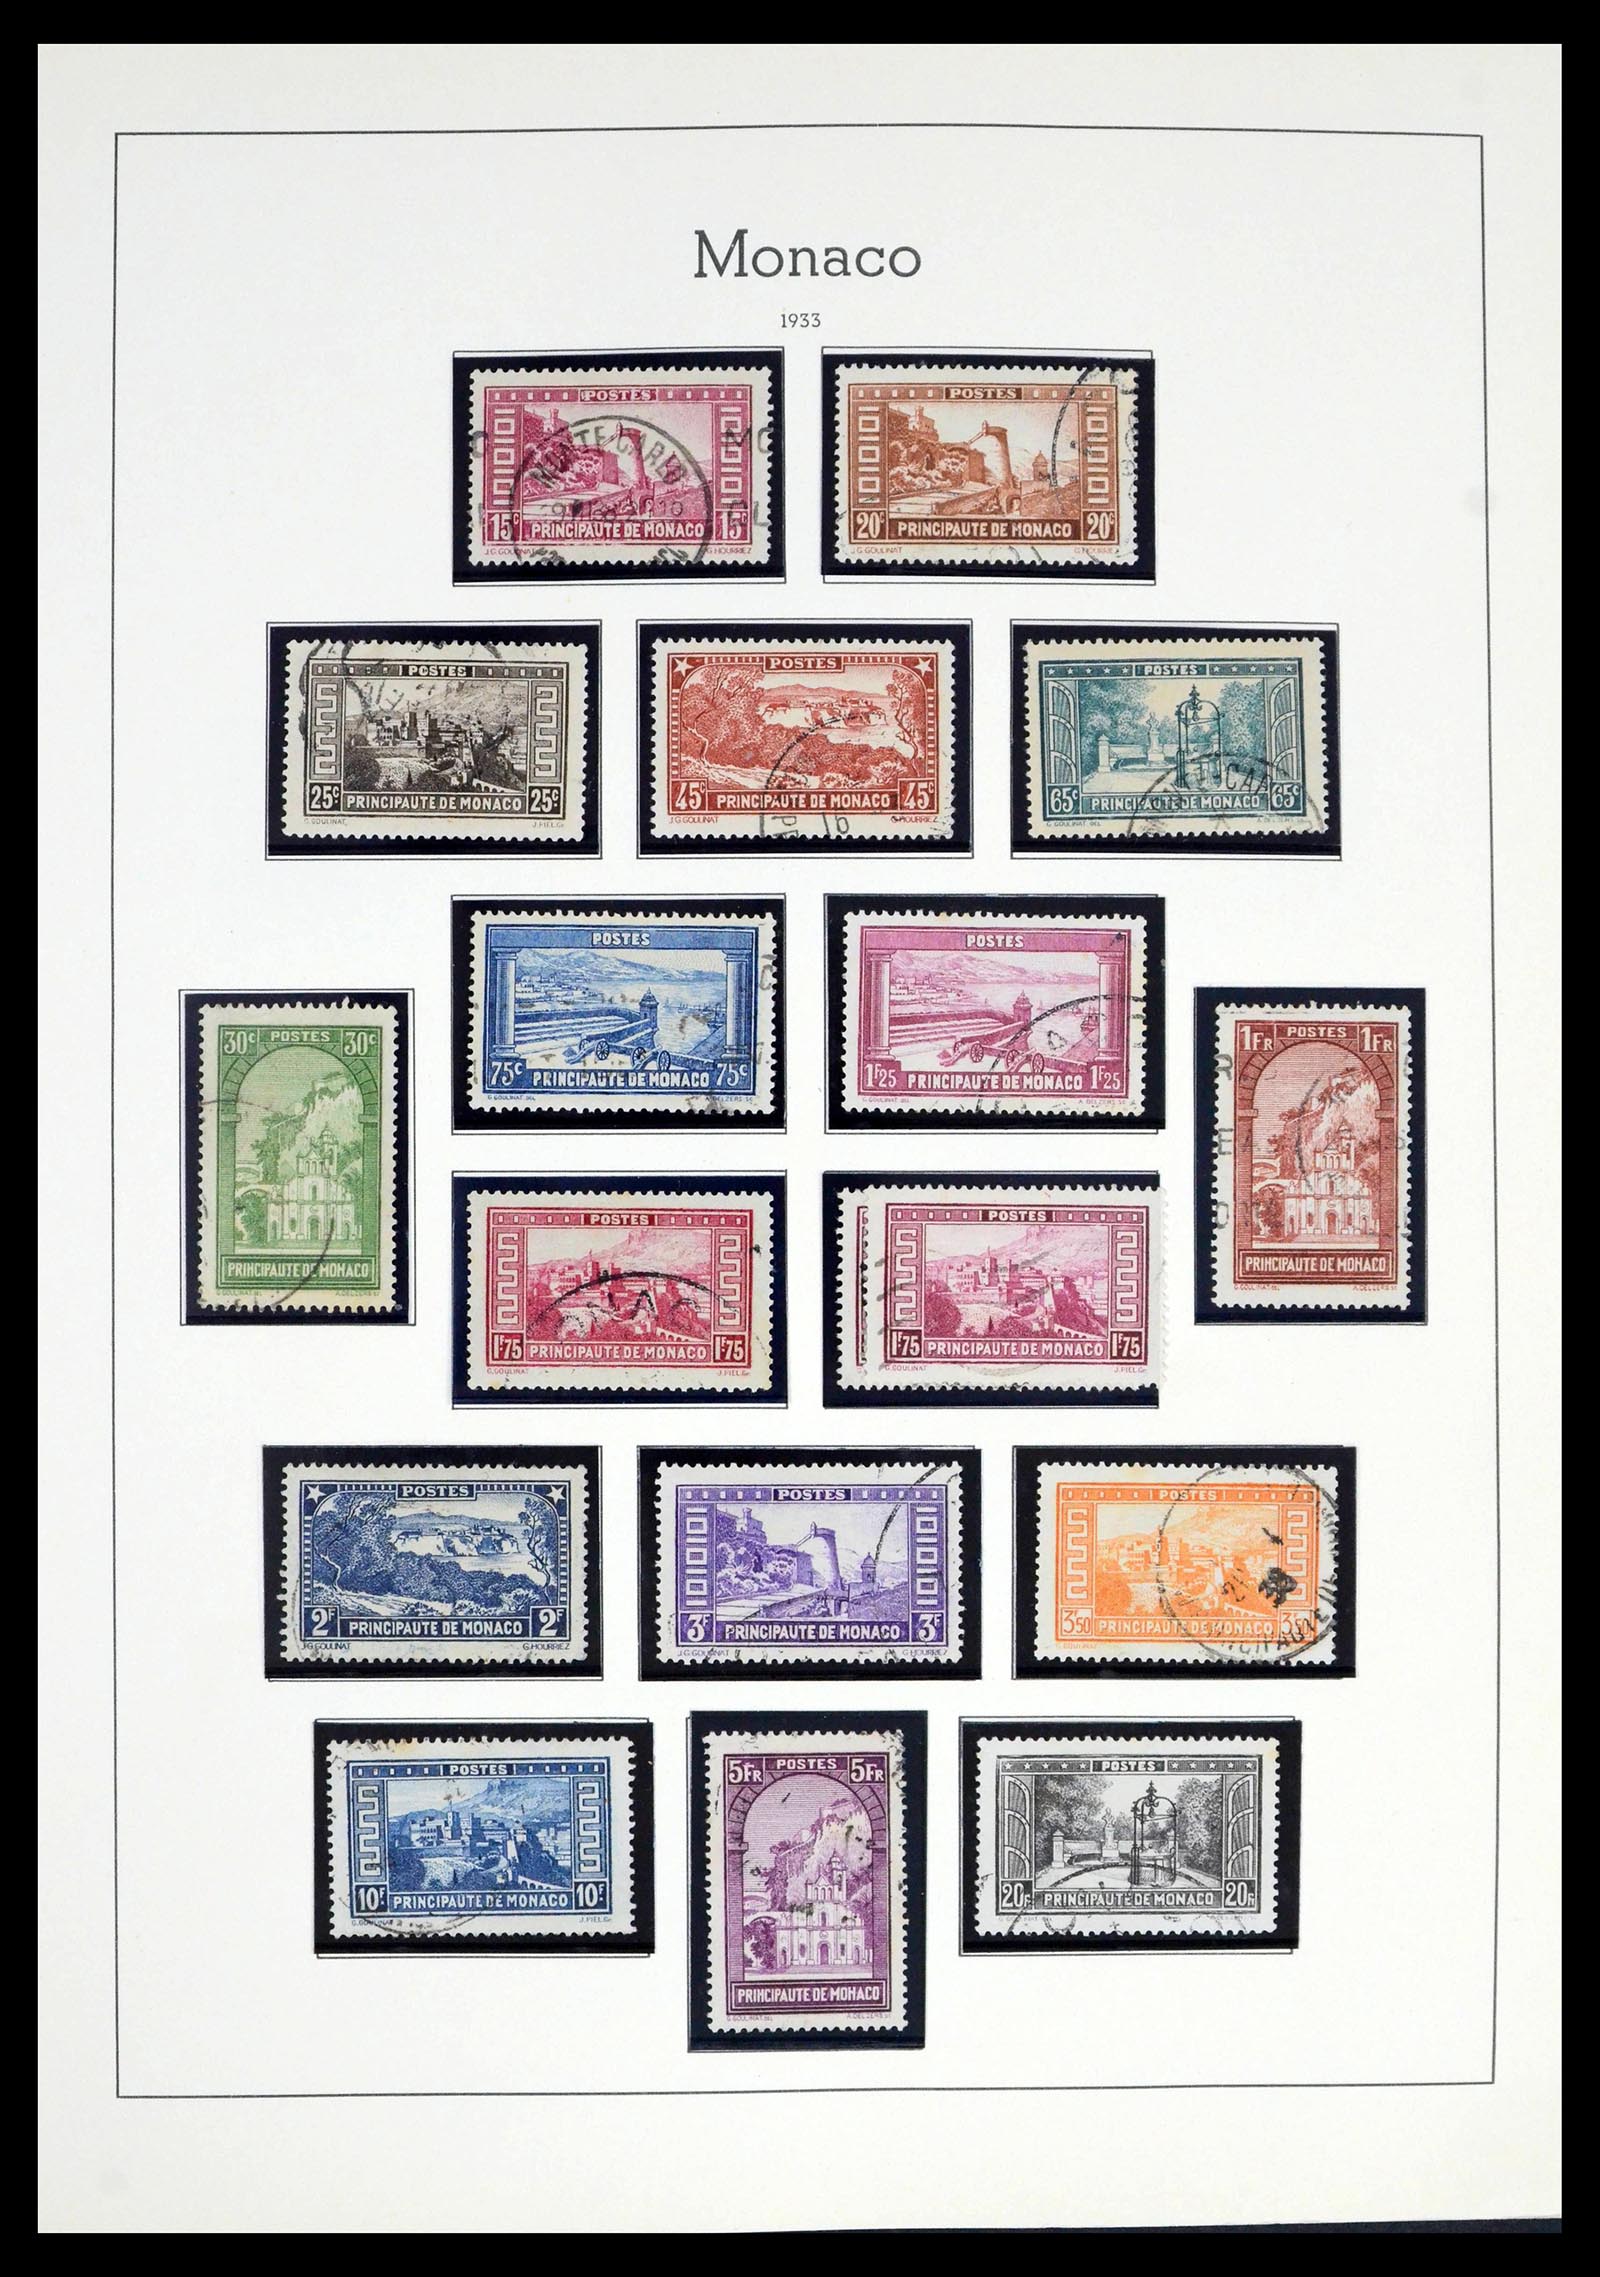 39392 0009 - Stamp collection 39392 Monaco 1885-1999.